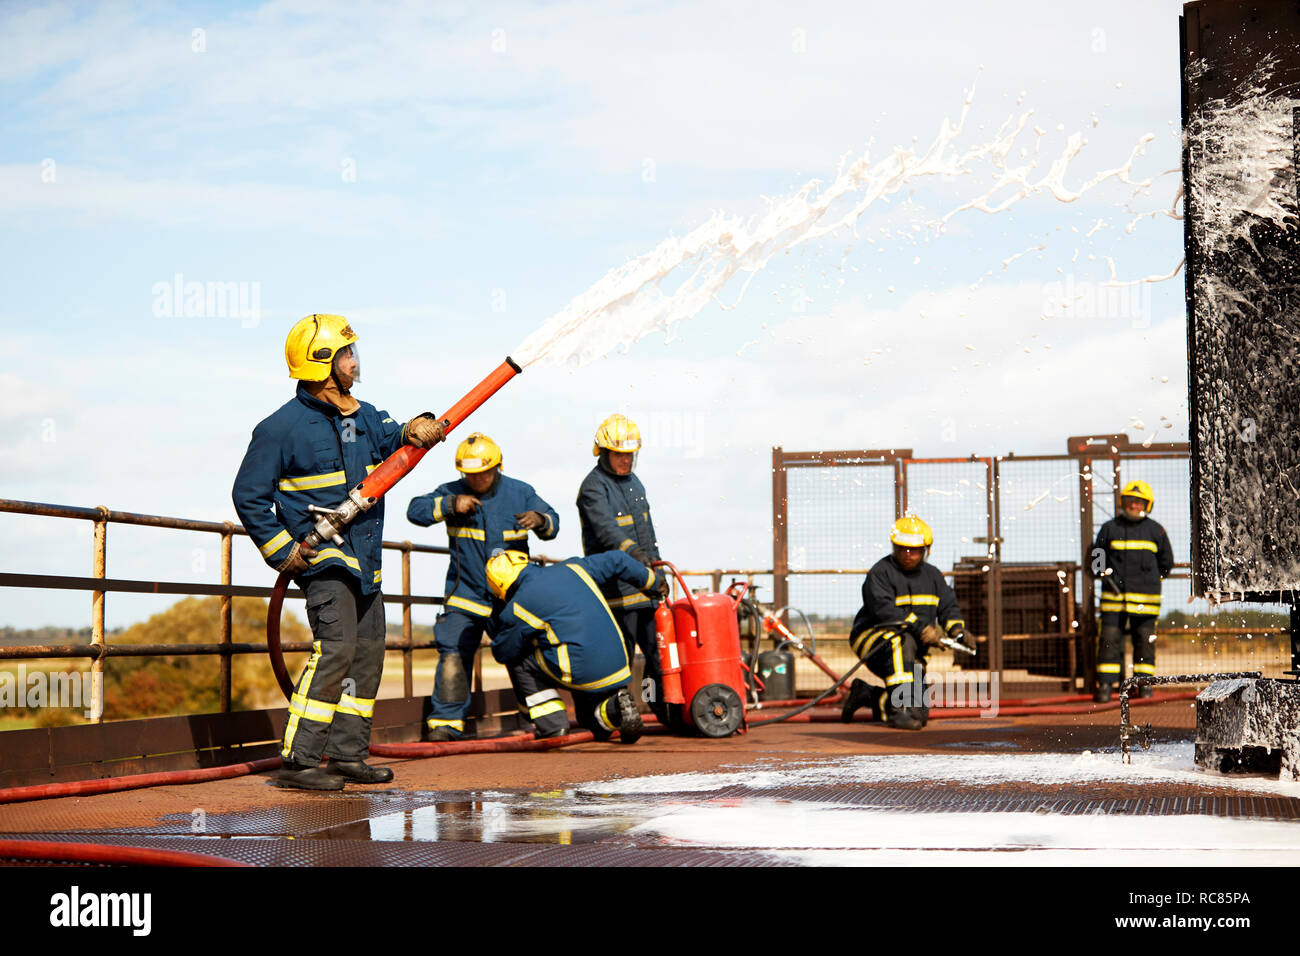 Firemen training, firemen spraying firefighting foam at training facility Stock Photo